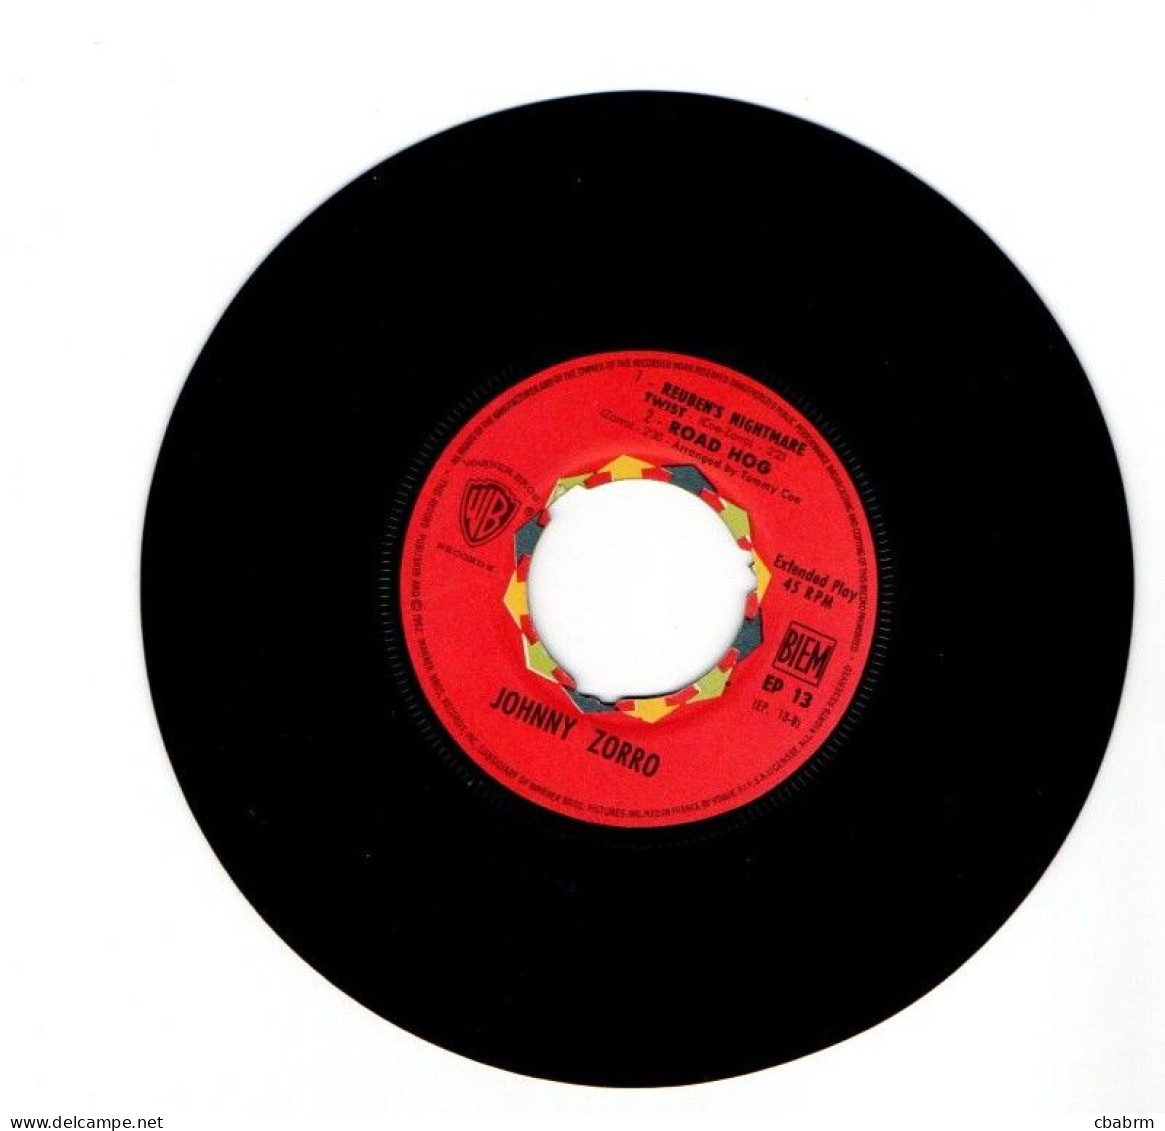 EP 45 TOURS JOHNNY ZORRO COESVILLE TWIST 1961 FRANCE WARNER BROS EP 13 - 7" - Rock